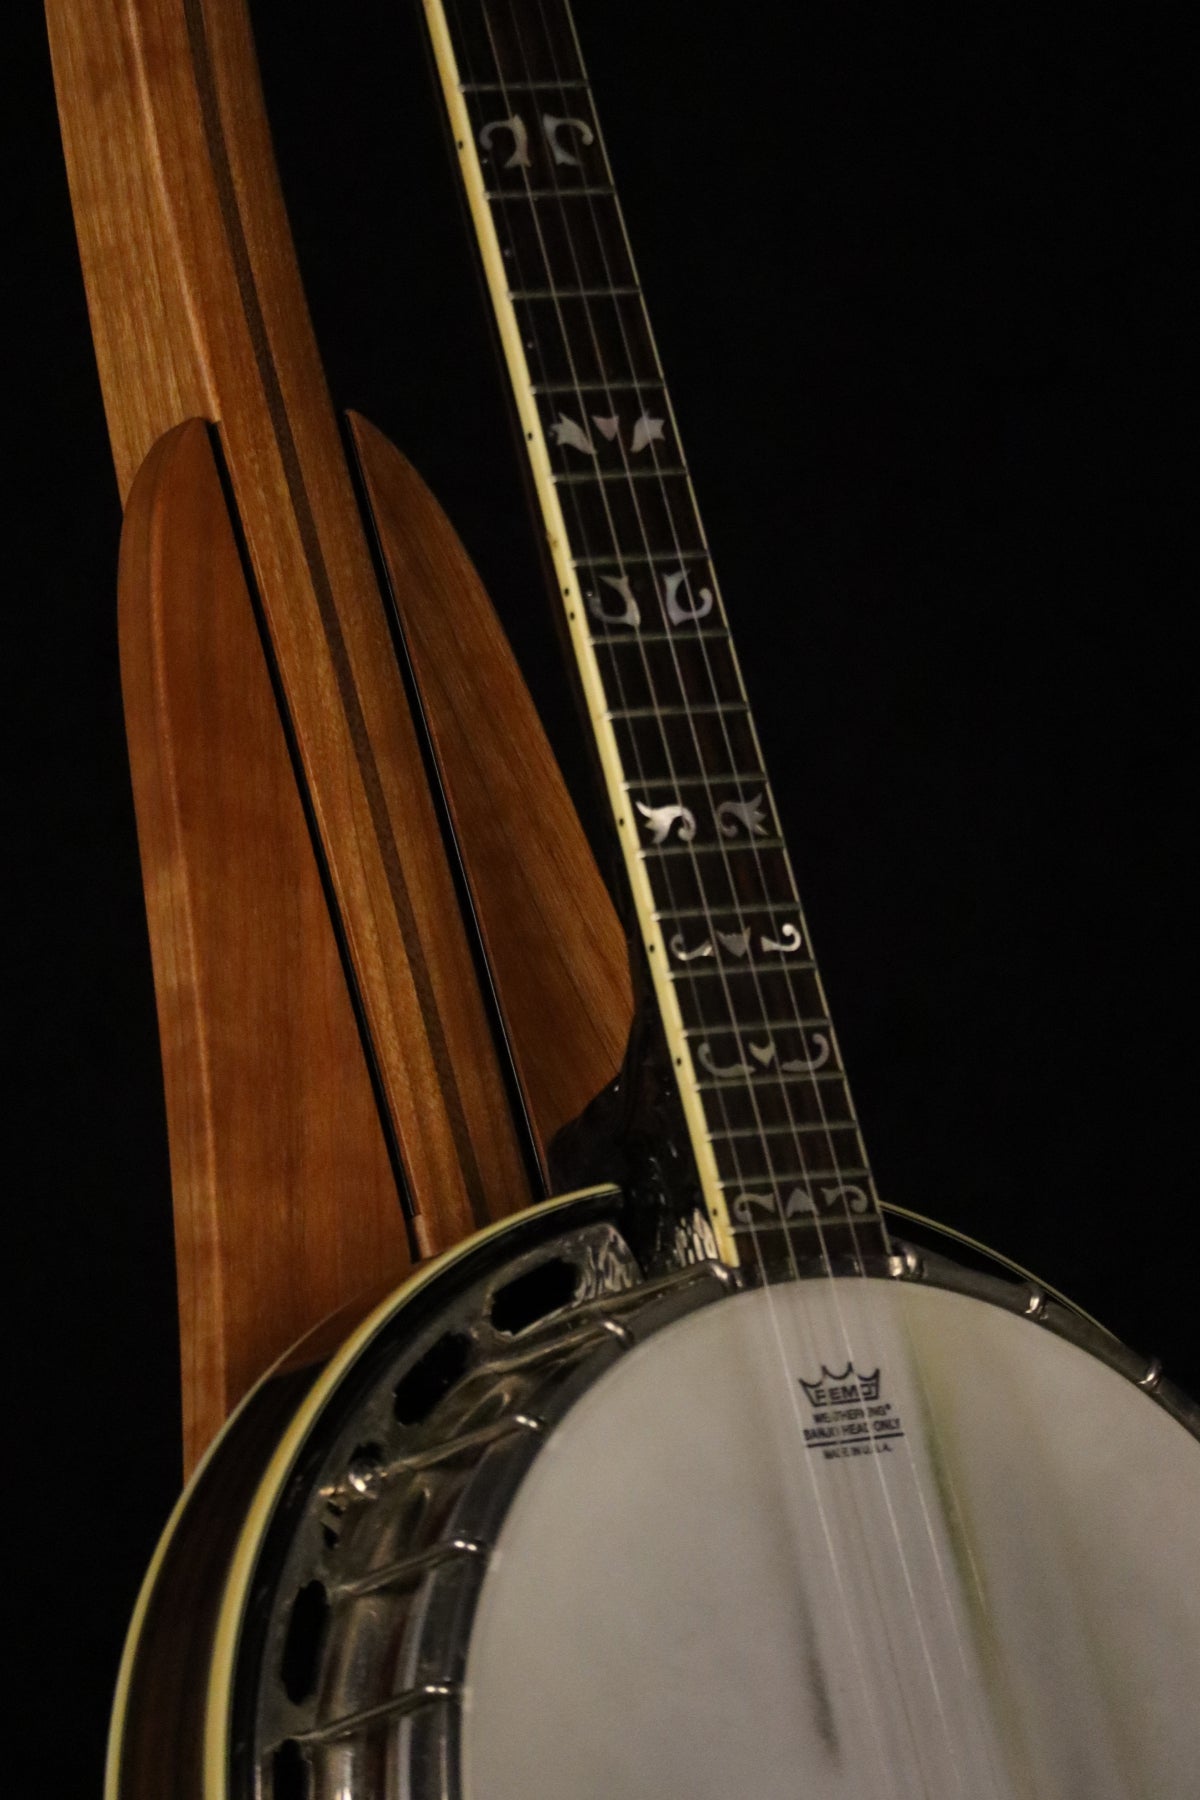 Folding cherry and walnut wood banjo floor stand closeup front image with Alvarez banjo